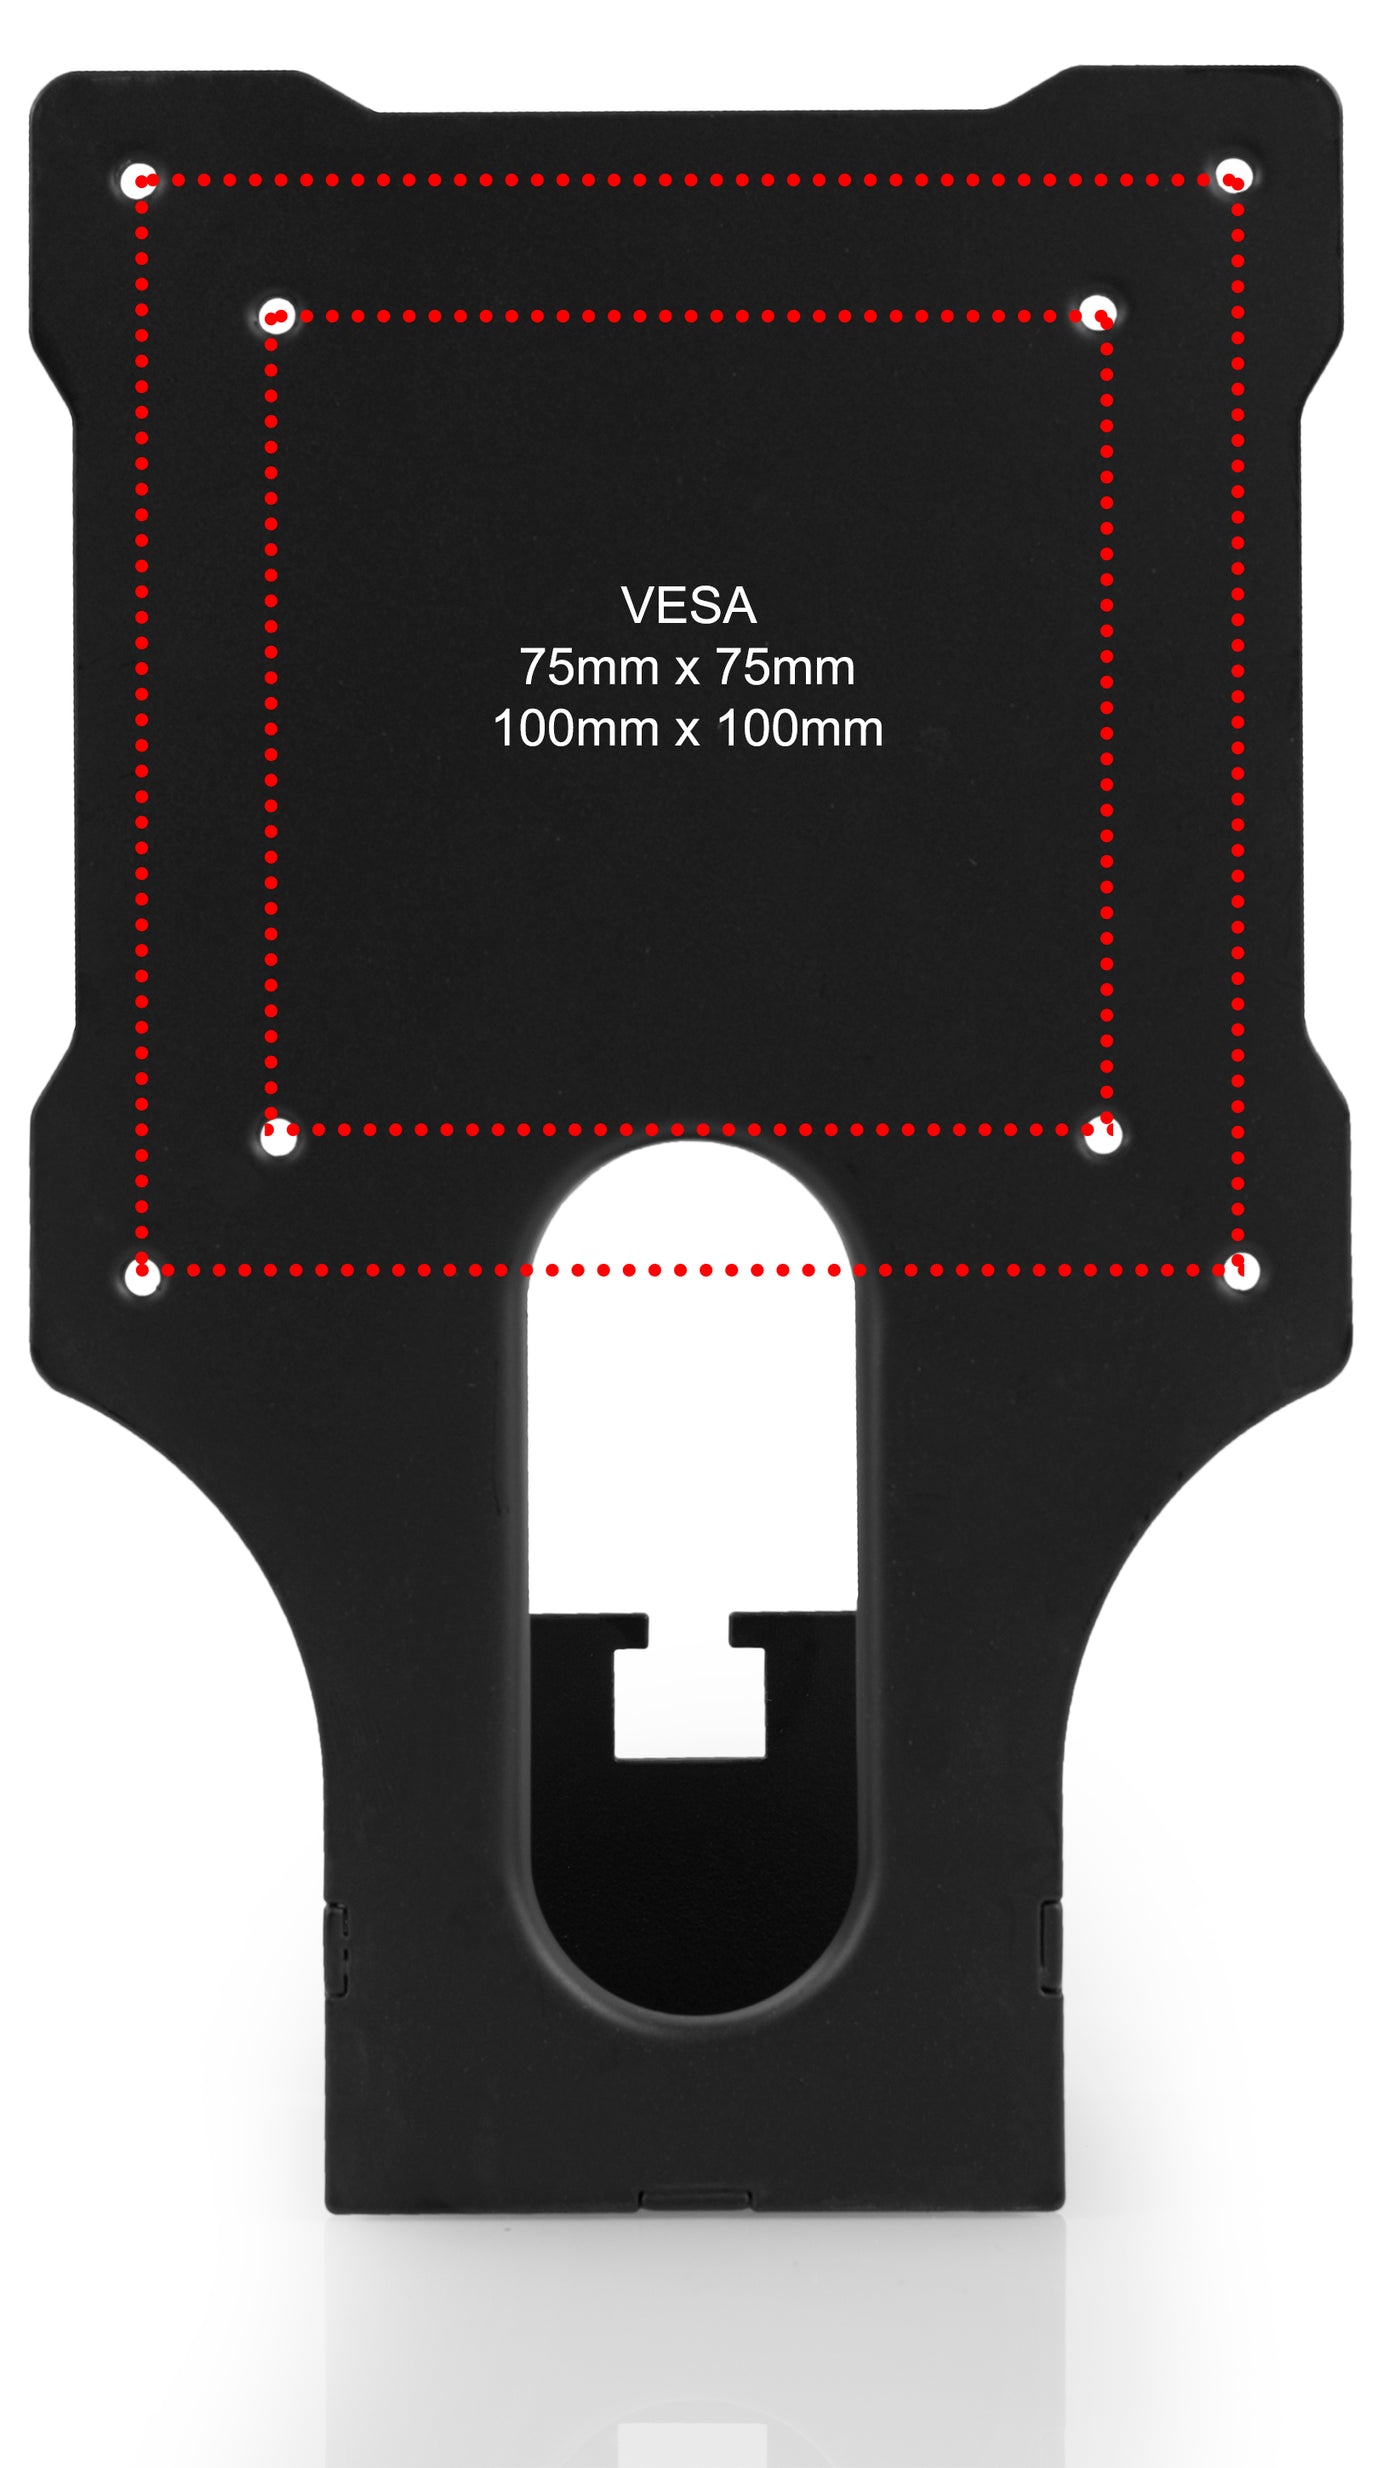 Standard VESA plate patterns of 75x75mm and 100x100mm.